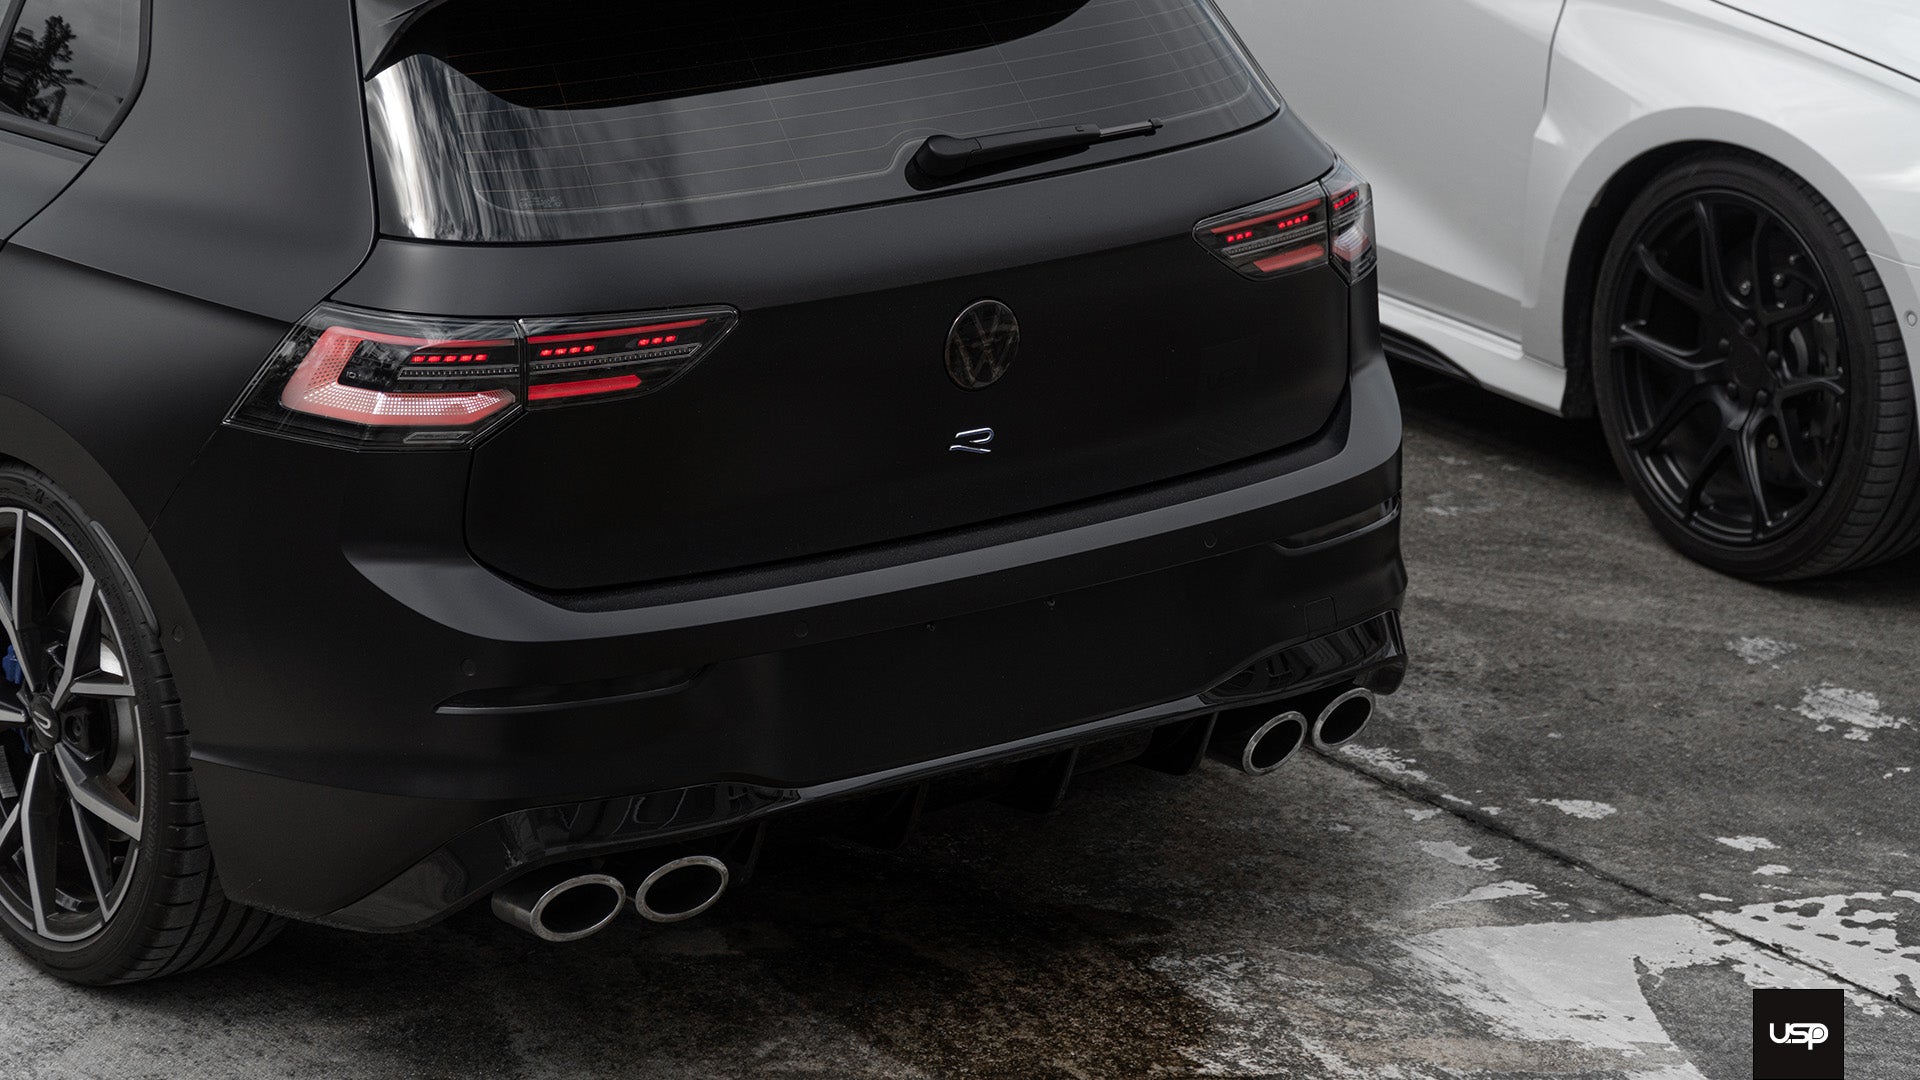 USP Euro Dynamic LED Tail Light Conversion For VW MK8 GTI/Golf R - Clear